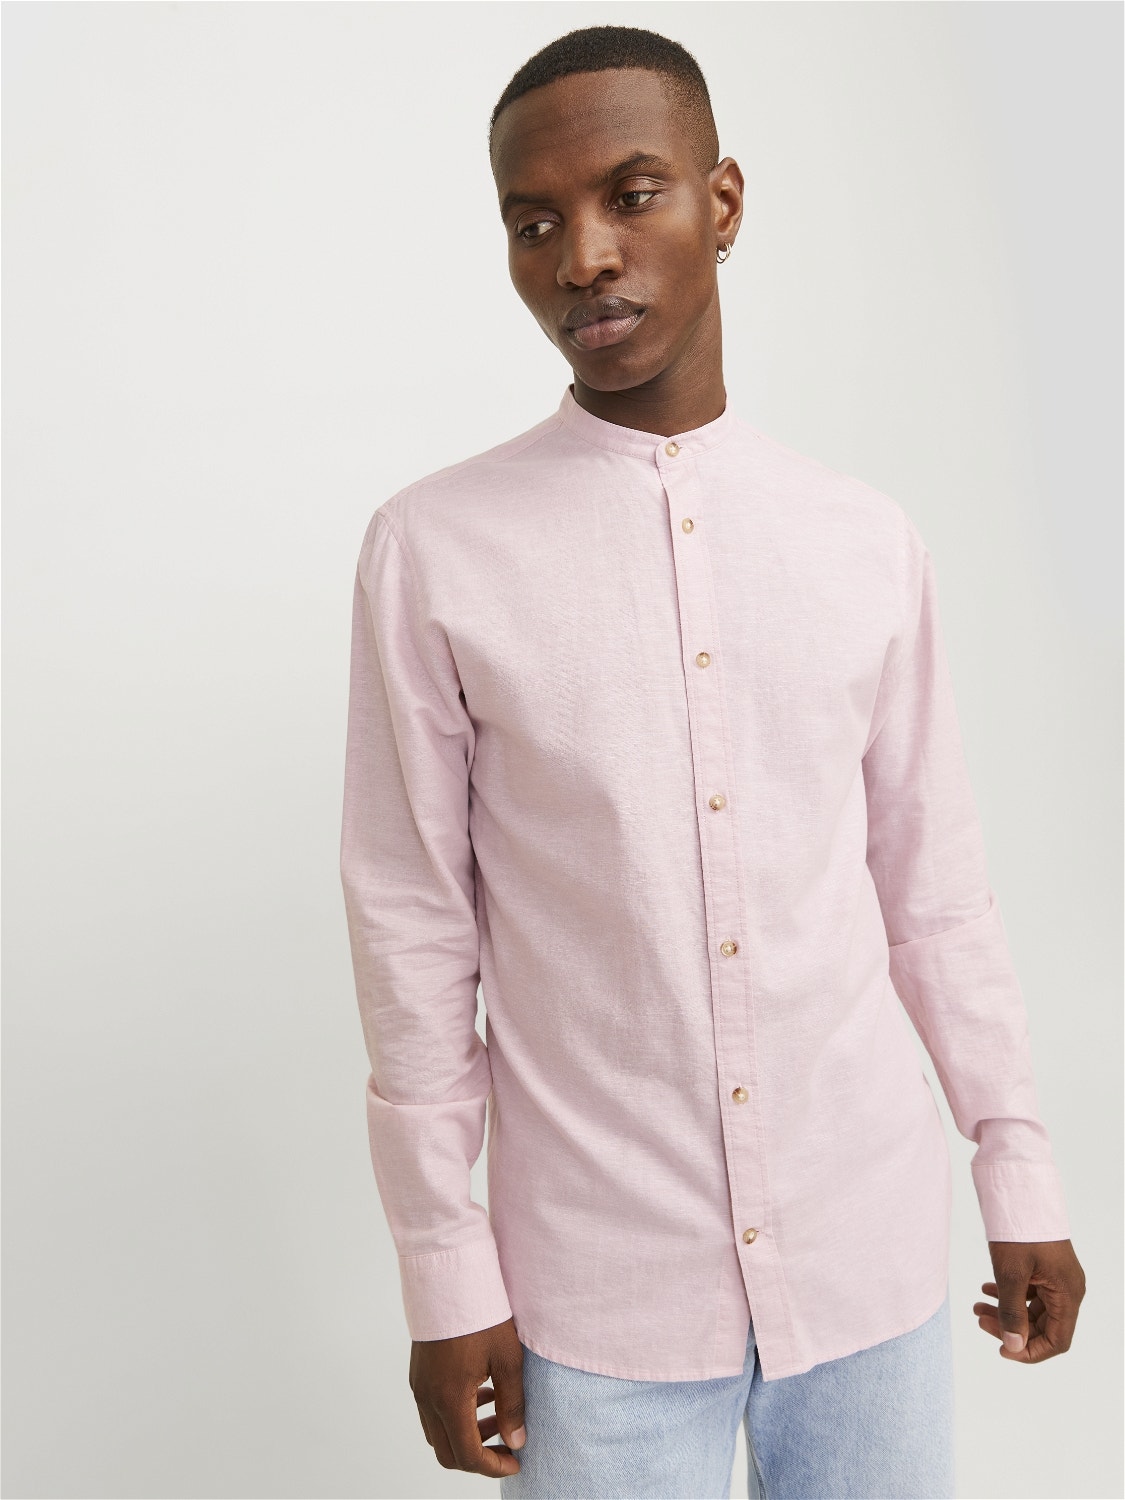 Jack & Jones Comfort Fit Marškiniai -Pink Nectar - 12248385